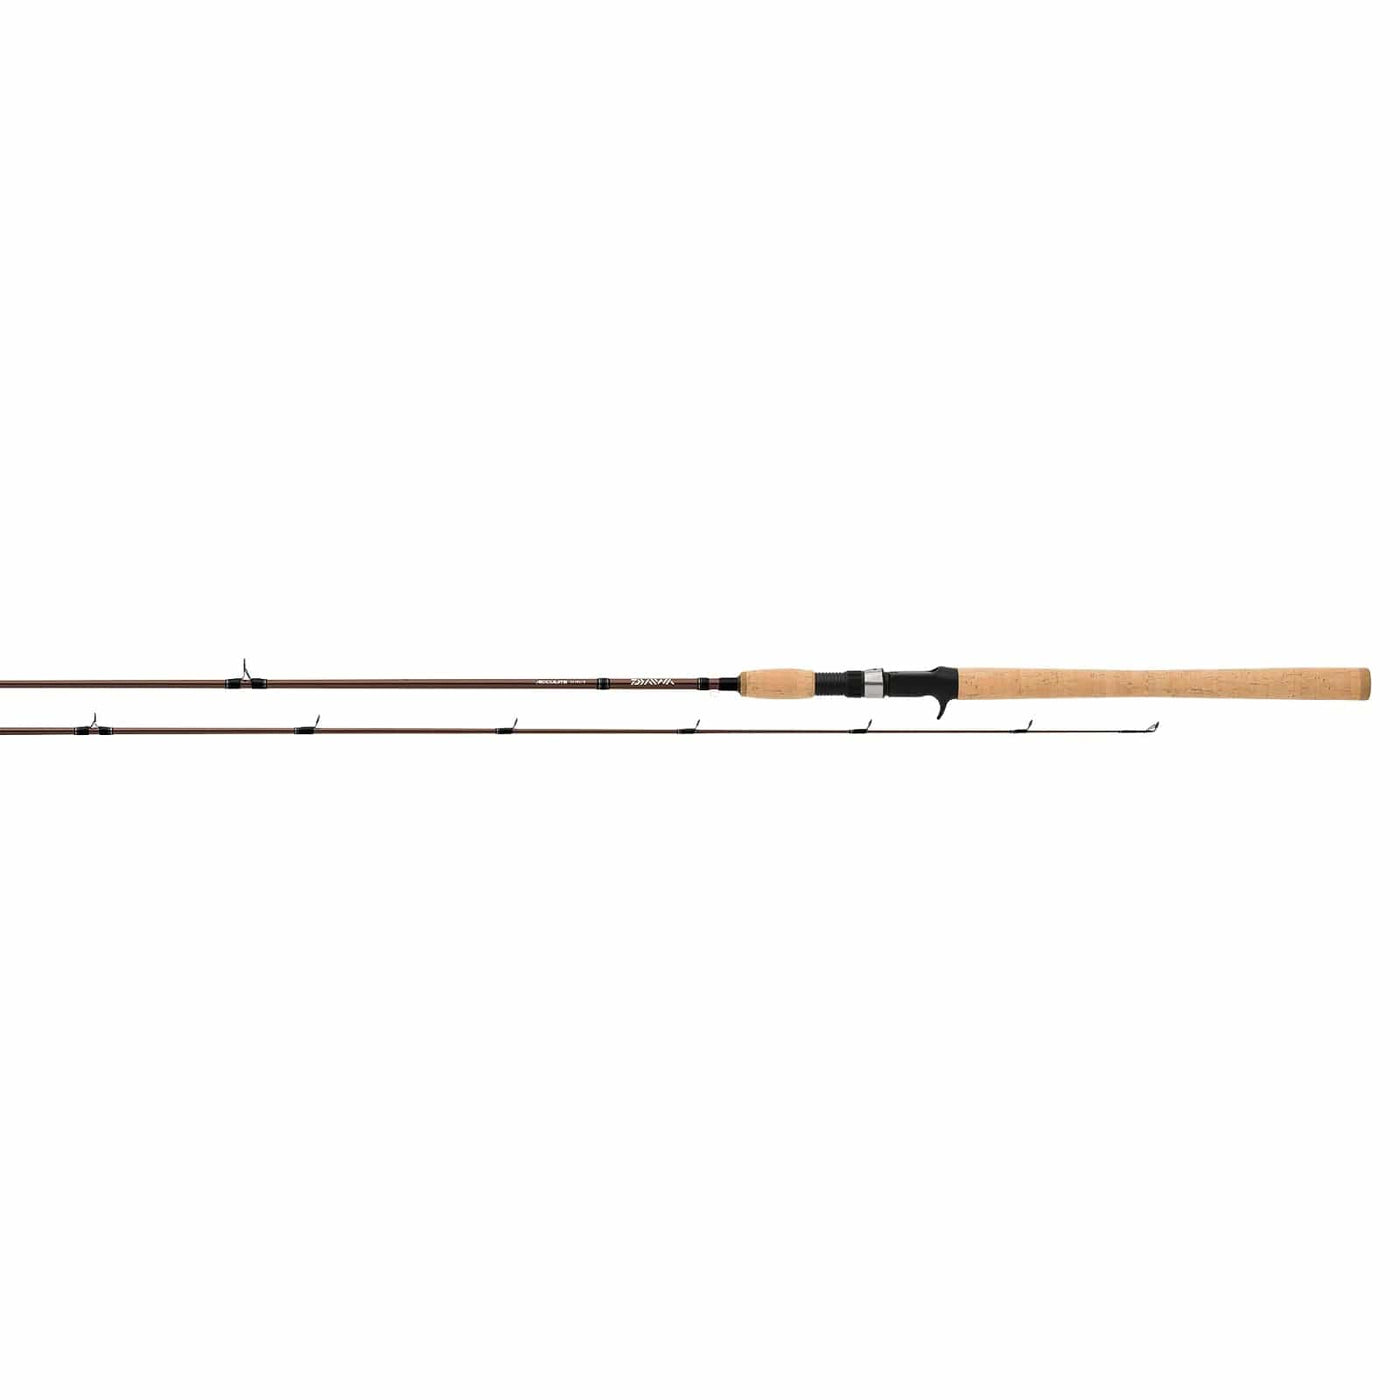 Daiwa Daiwa Acculite Spinning Rod ACLT862MLFS 8 ft 6 in 2 pc Fishing